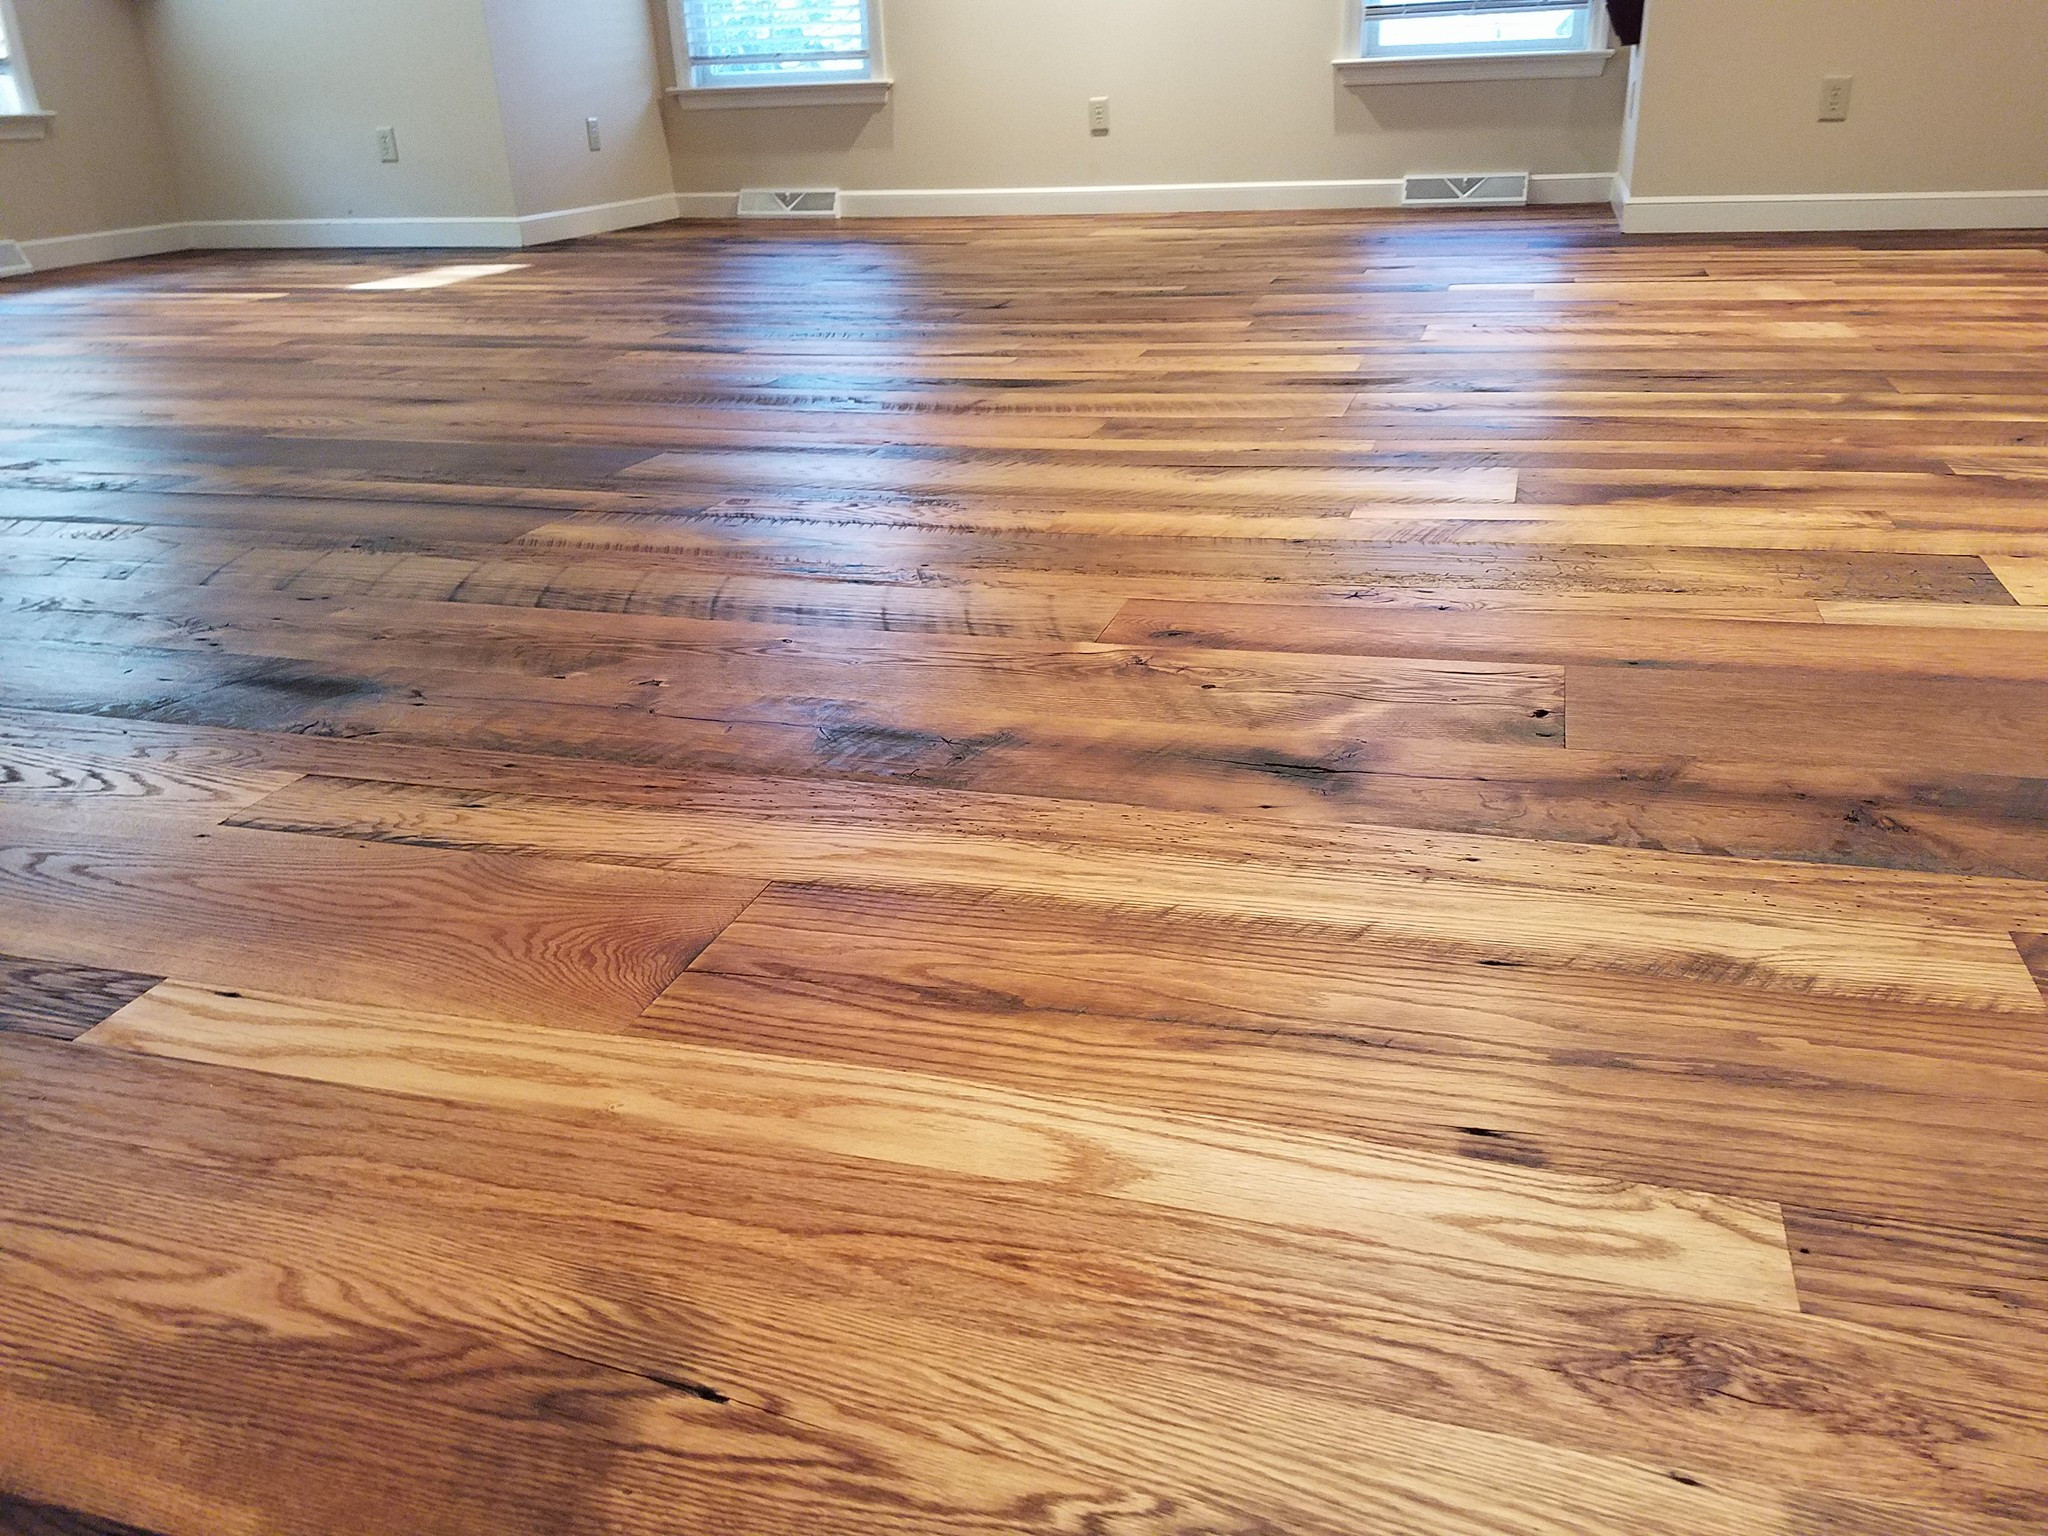 11 Stylish Hardwood Floor Cleaning Companies Near Me 2023 free download hardwood floor cleaning companies near me of vintage wood flooring with regard to 15540630 1468260353201806 4284335561504308085 o